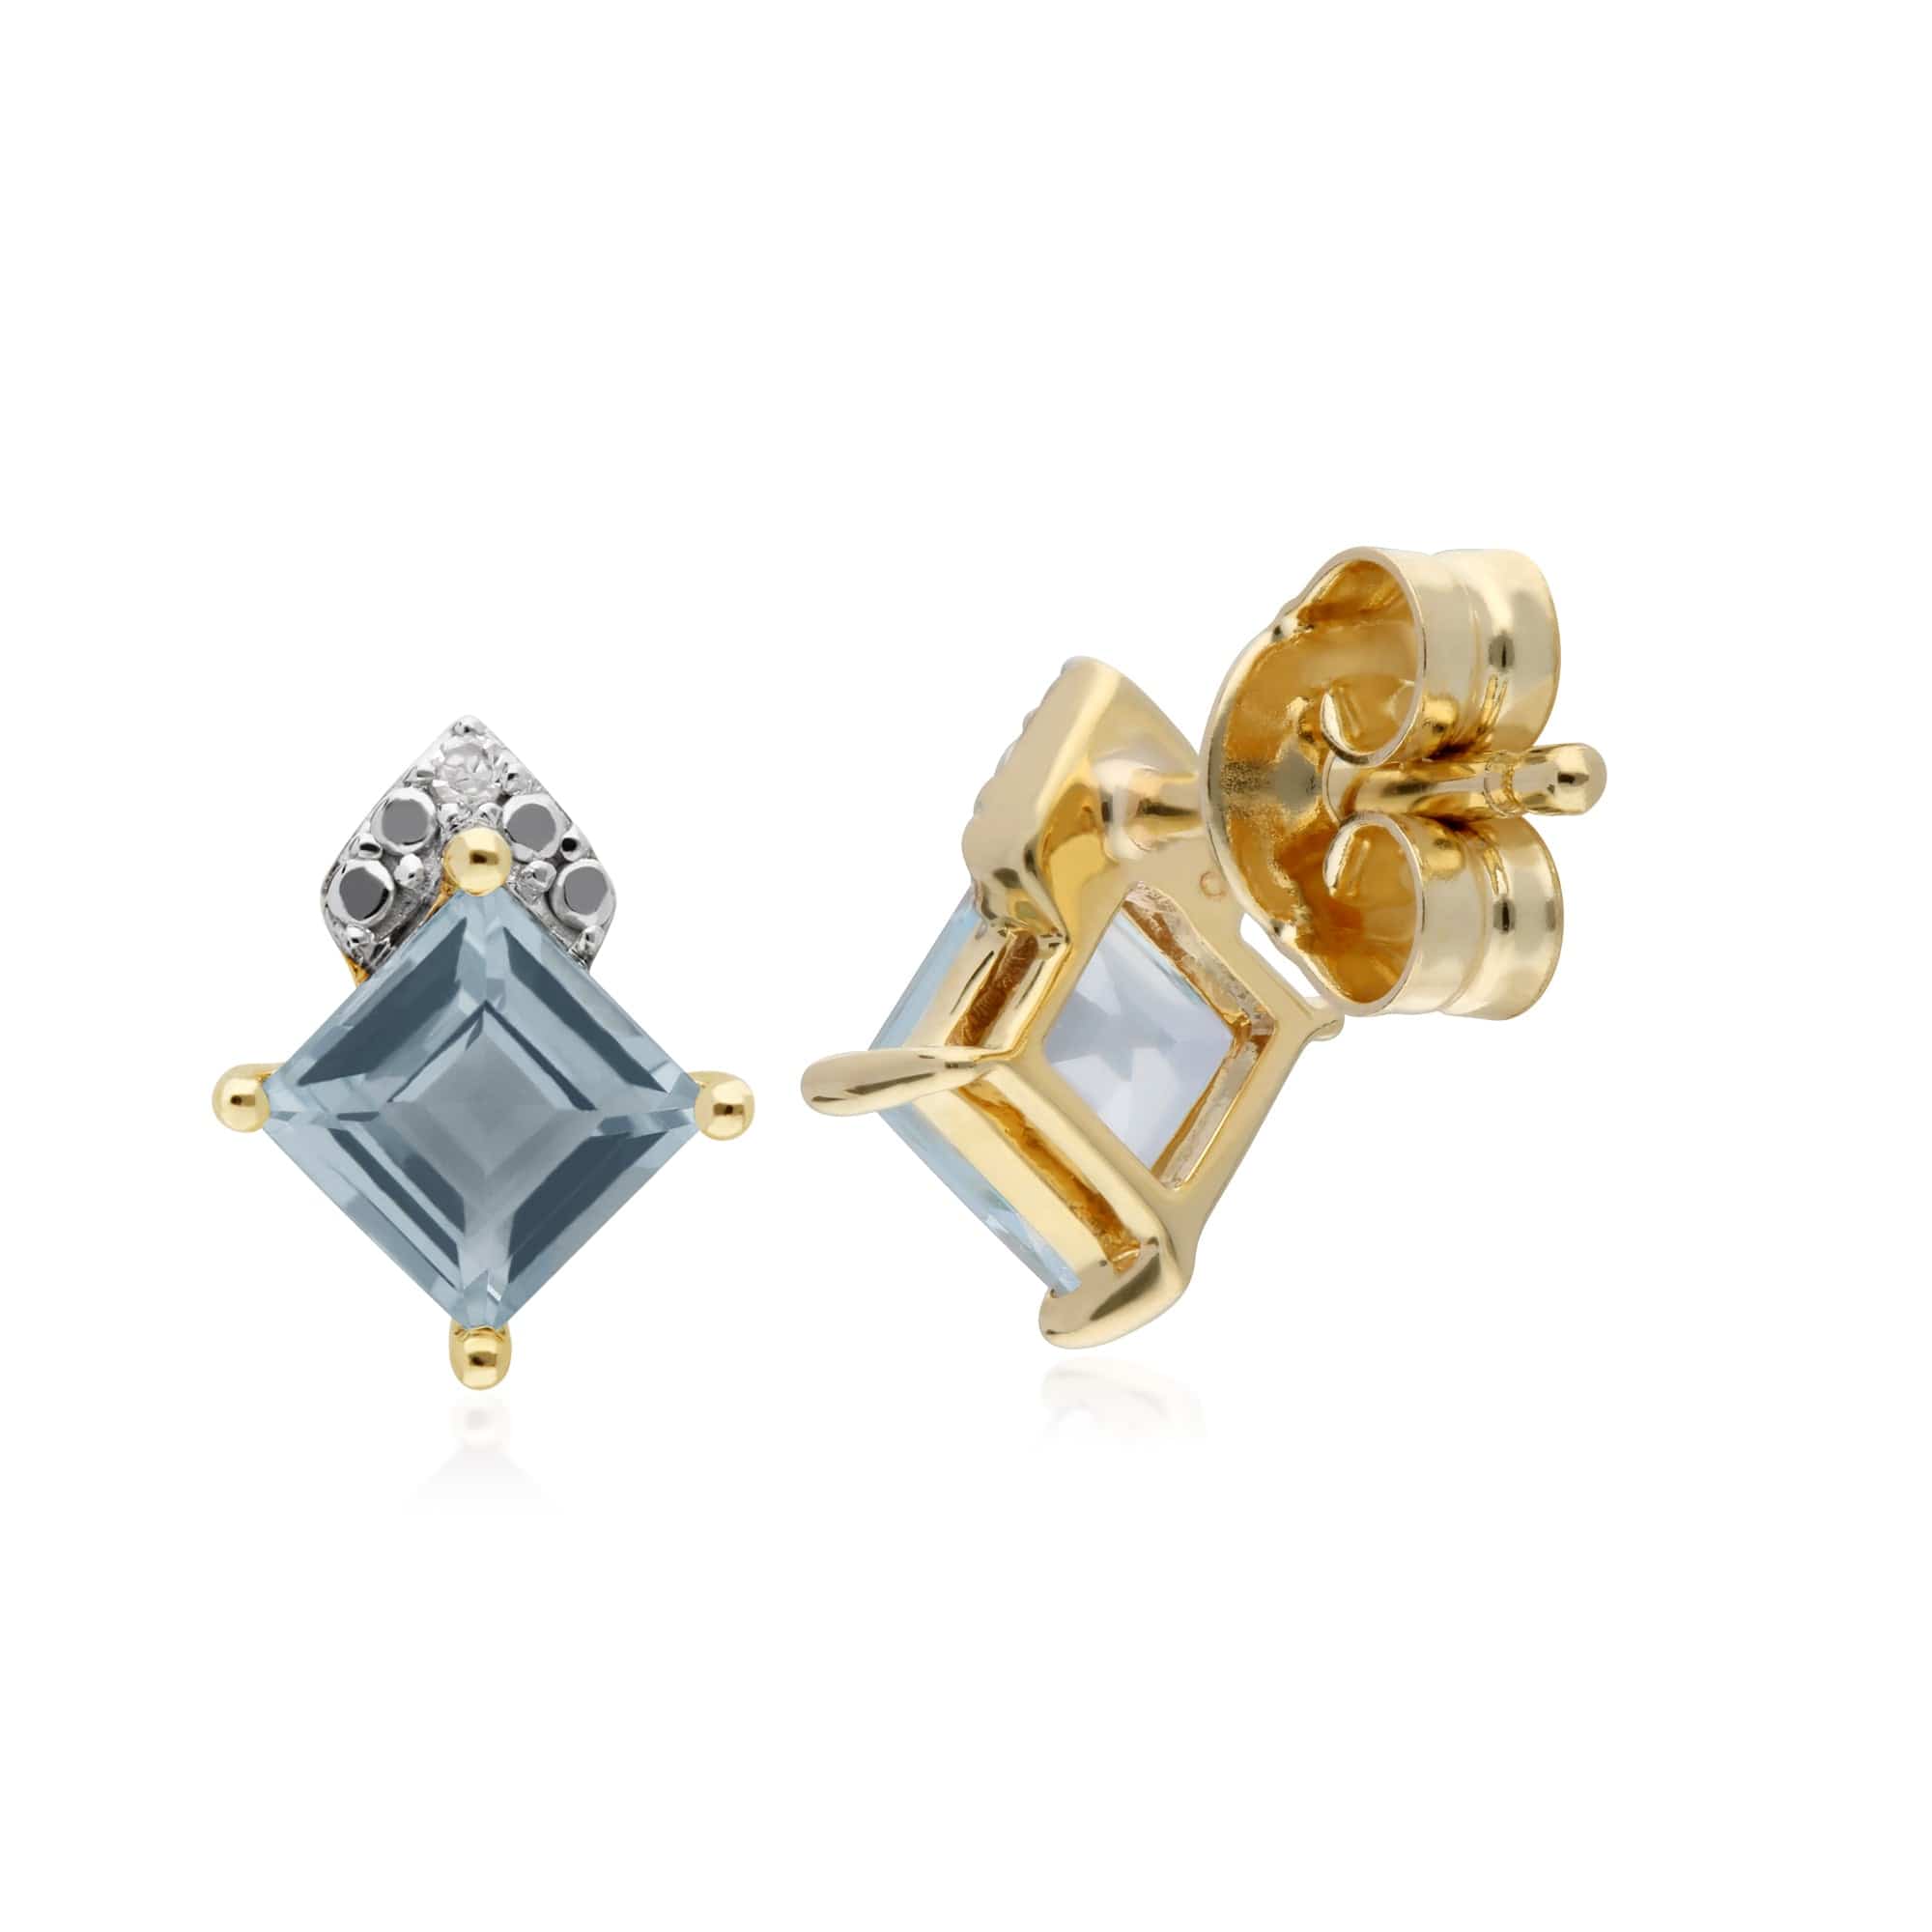 Gemondo 9ct Yellow Gold Blue Topaz & Diamond Square Stud Earrings - Gemondo